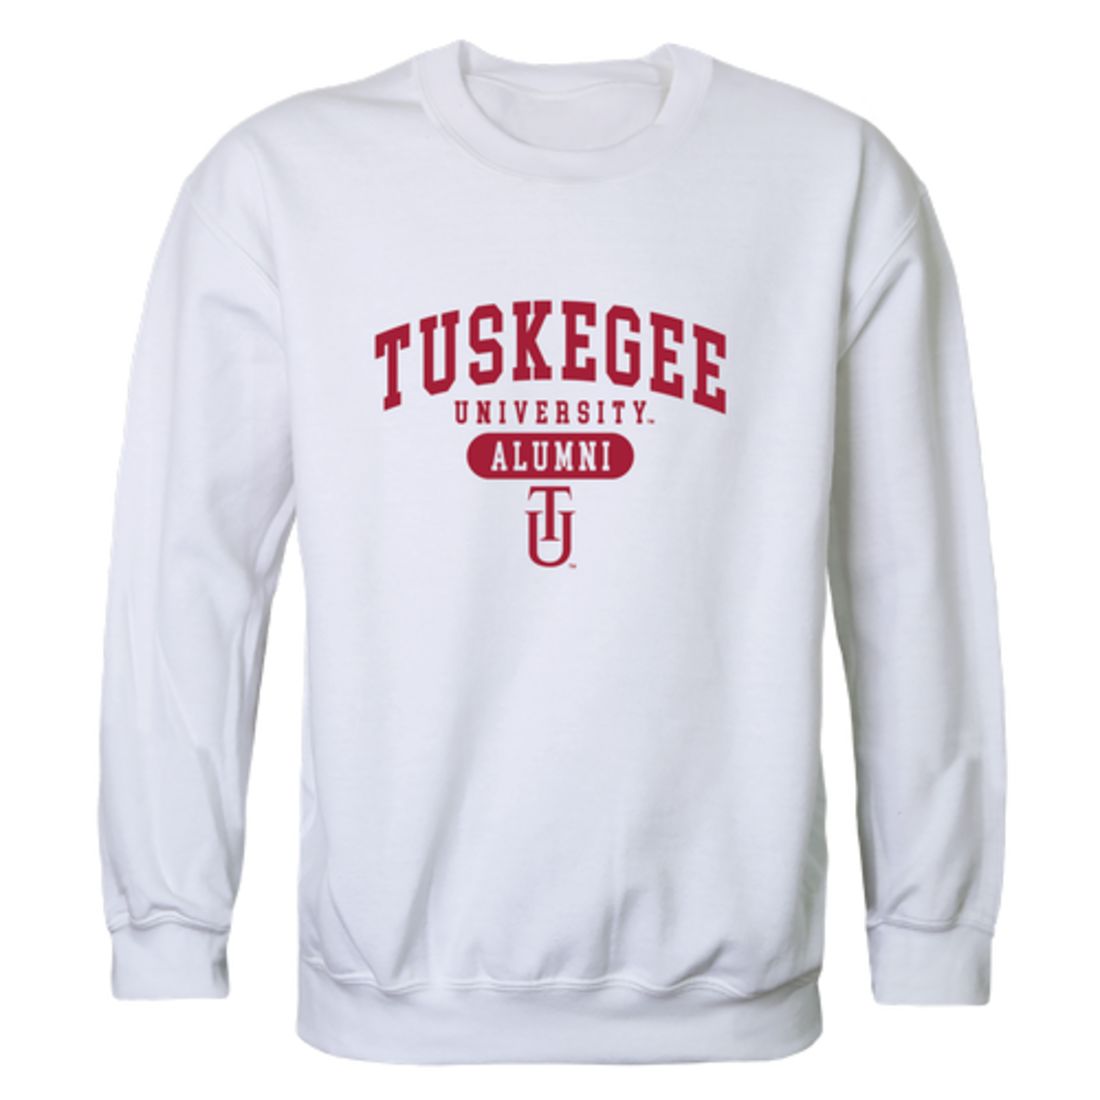 Tuskegee University Golden Tigers Alumni Fleece Crewneck Pullover Sweatshirt Heather Gray-Campus-Wardrobe